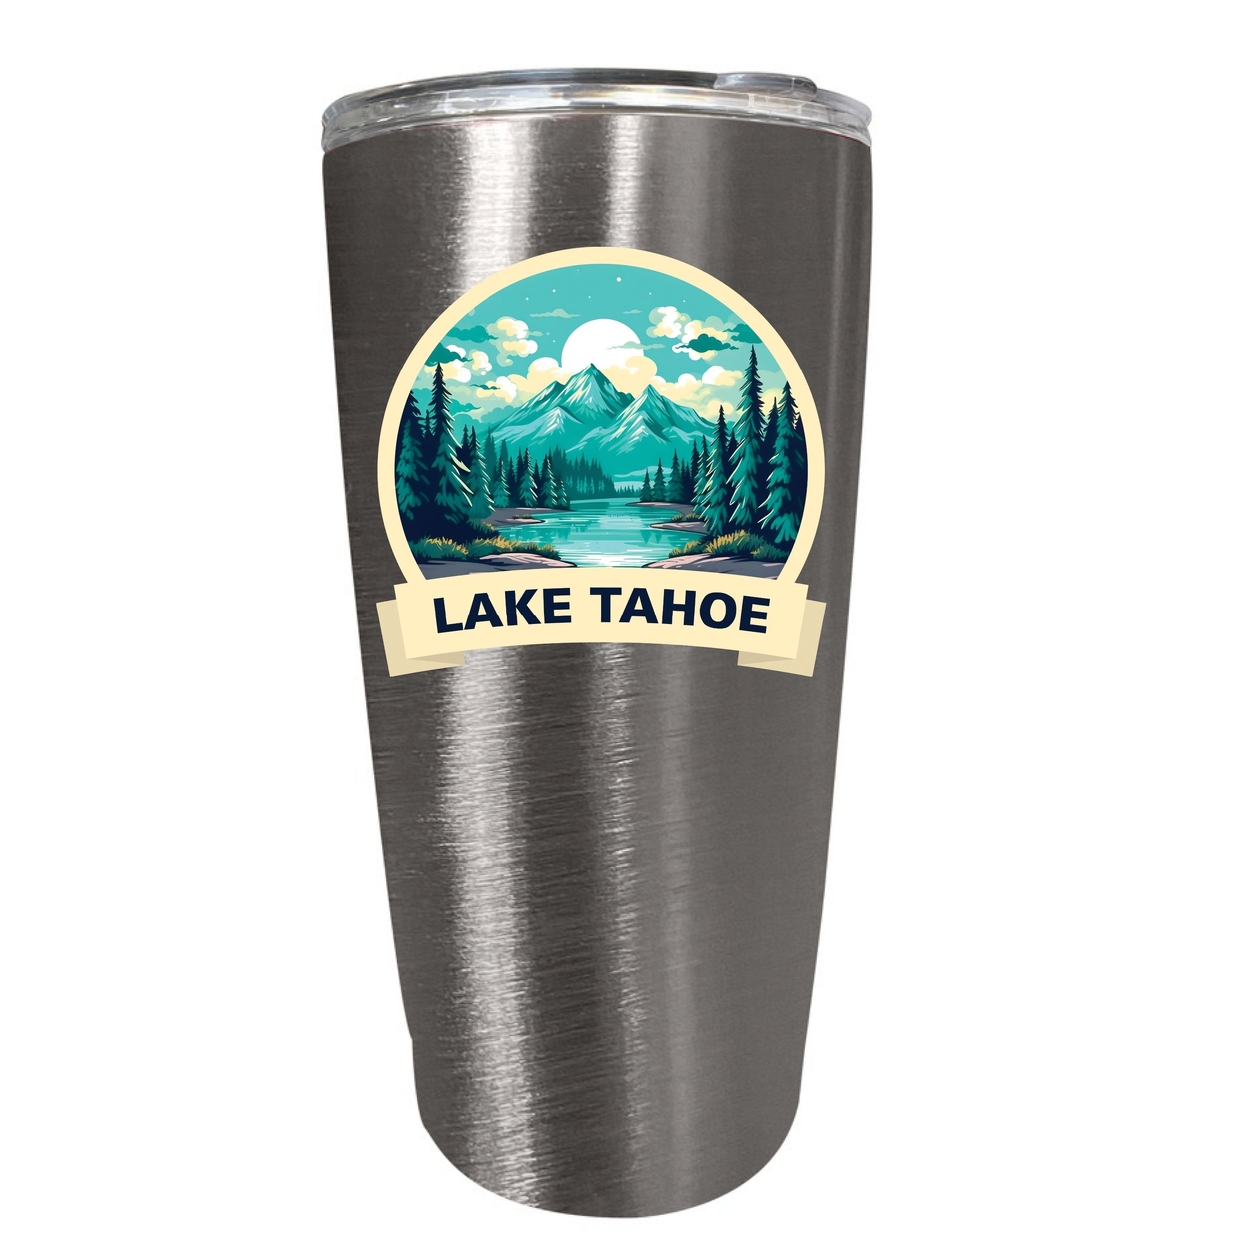 Lake Tahoe California Souvenir 16 Oz Stainless Steel Insulated Tumbler - Green,,Single